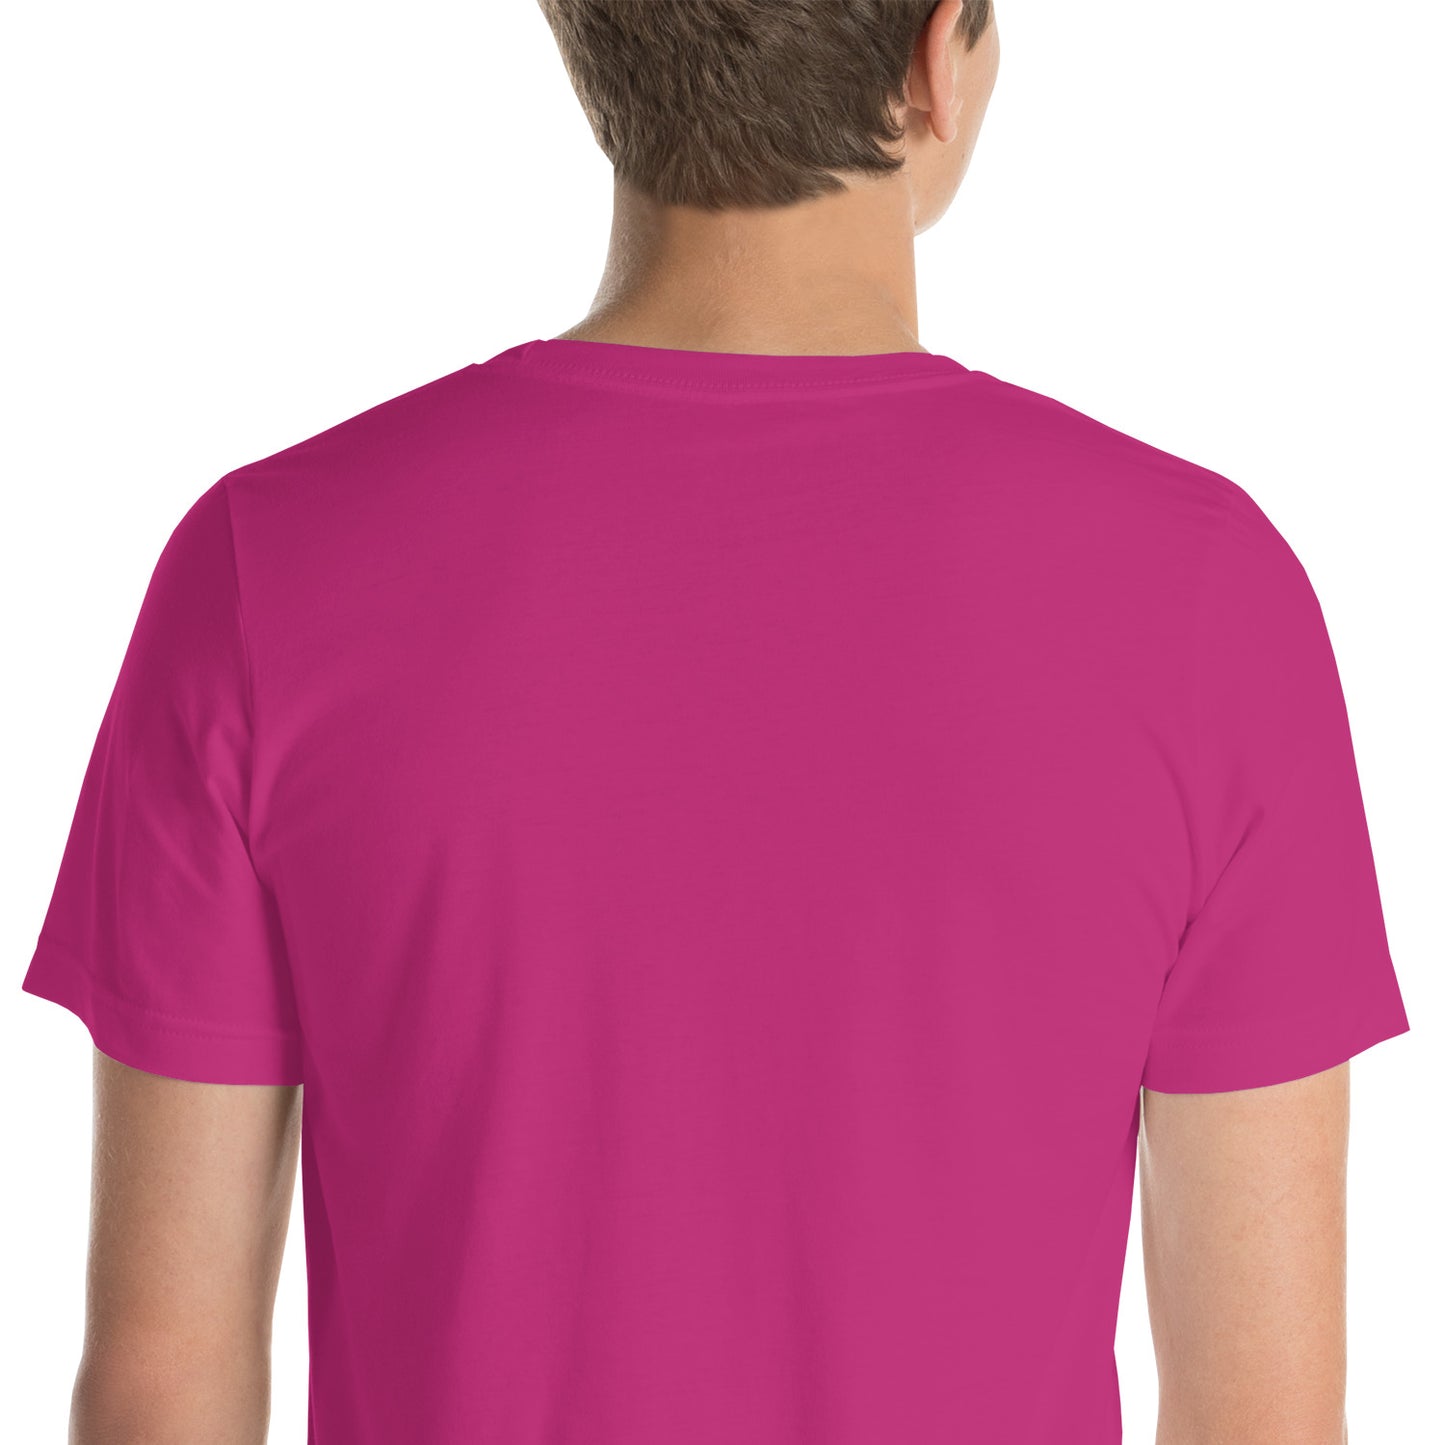 T-shirt (Unisex) - JoNej